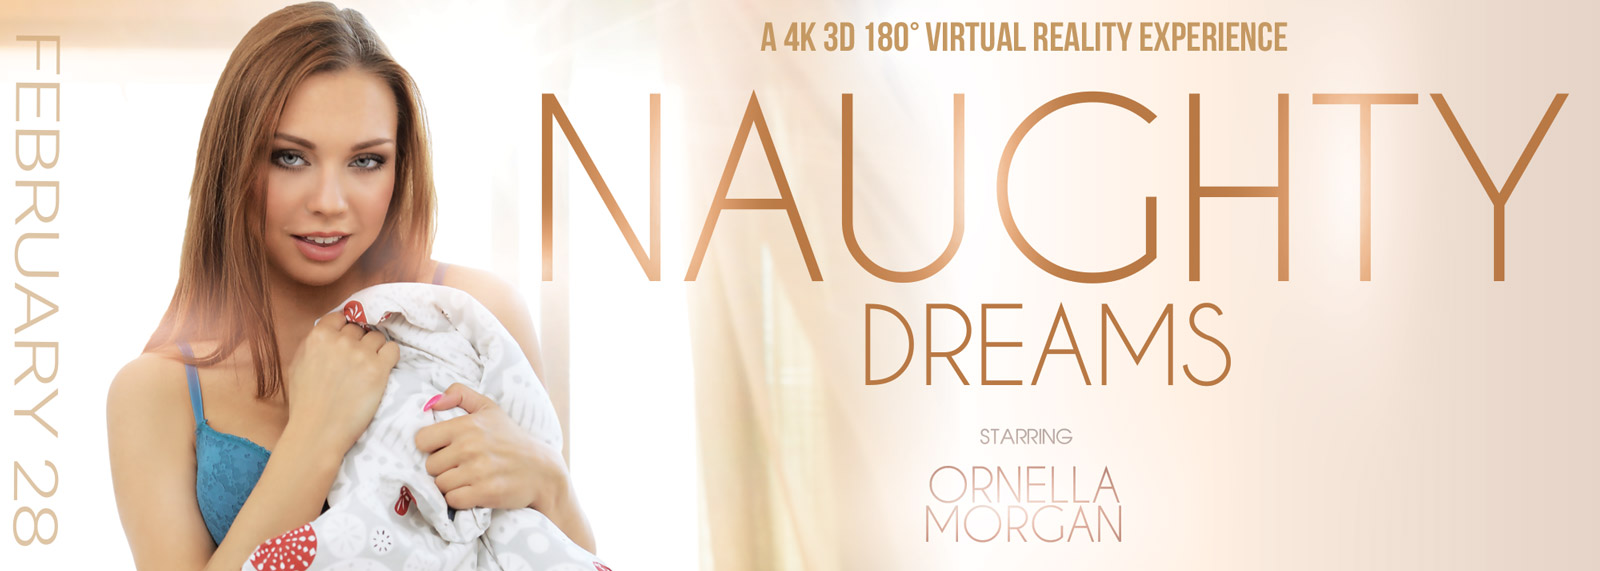 Naughty Dreams with Ornella Morgan  Slideshow